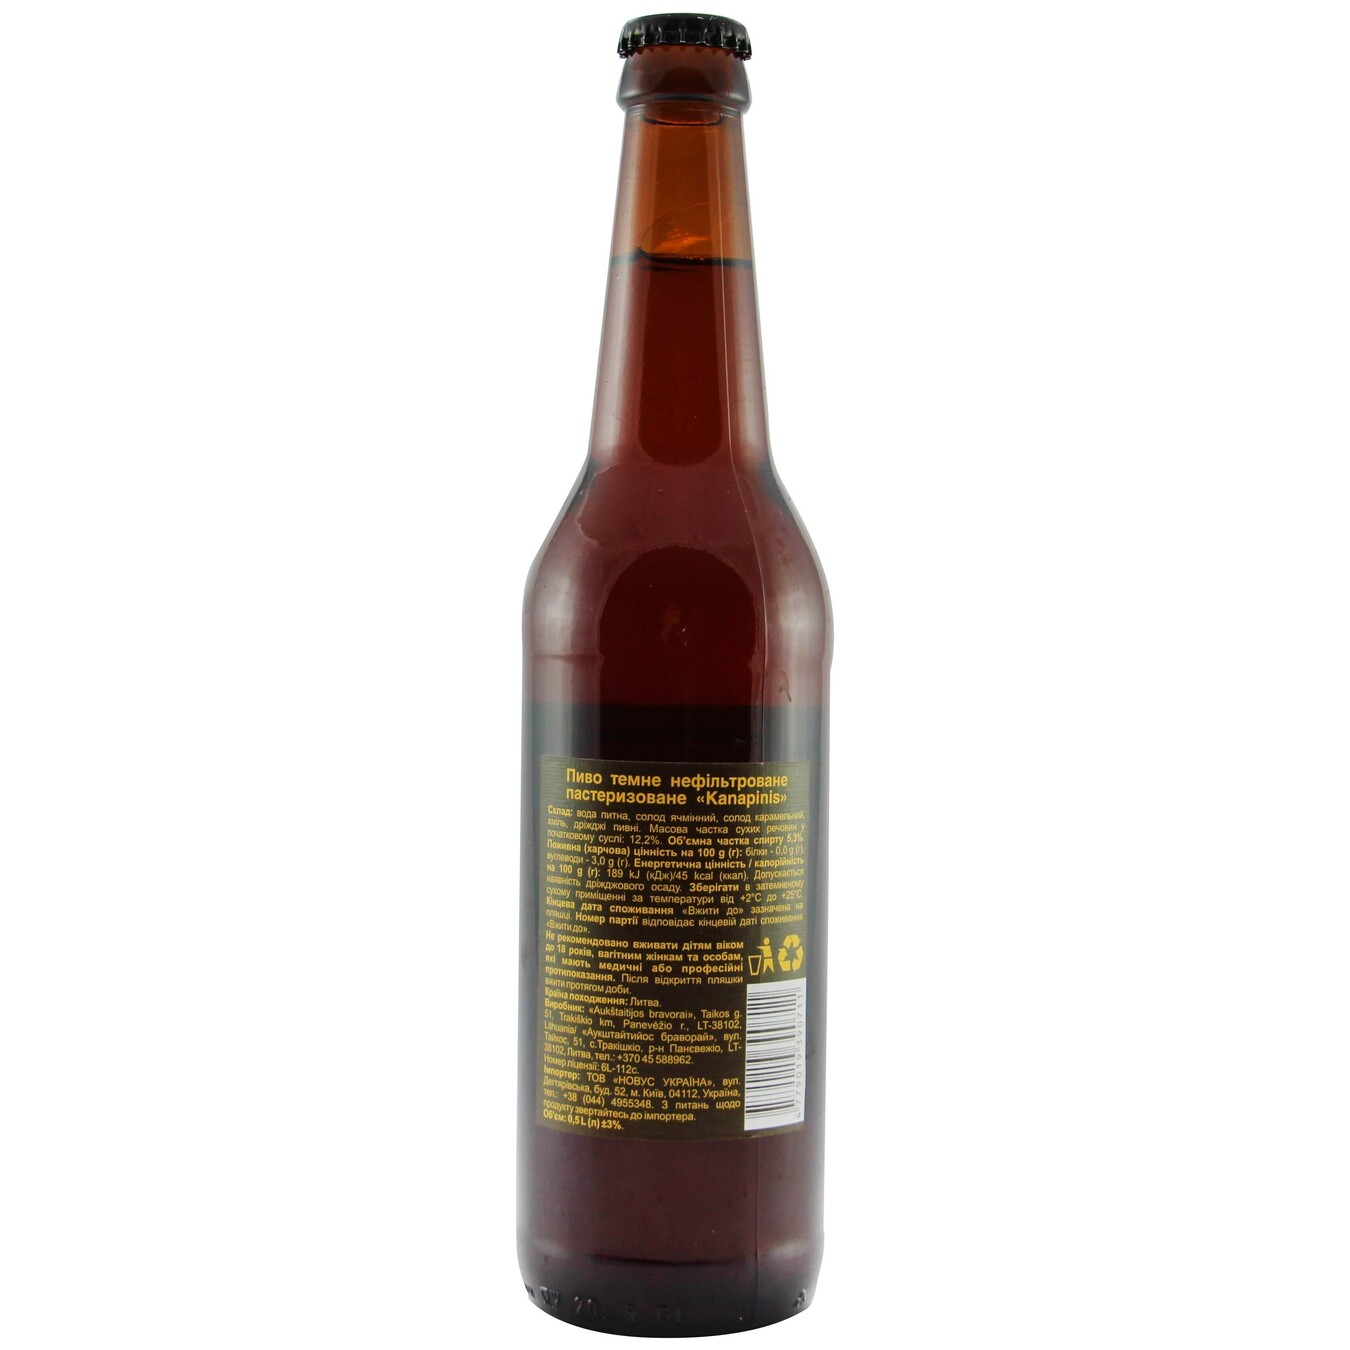 Kanapinis unfiltered dark beer 5,3% 0,5l 2